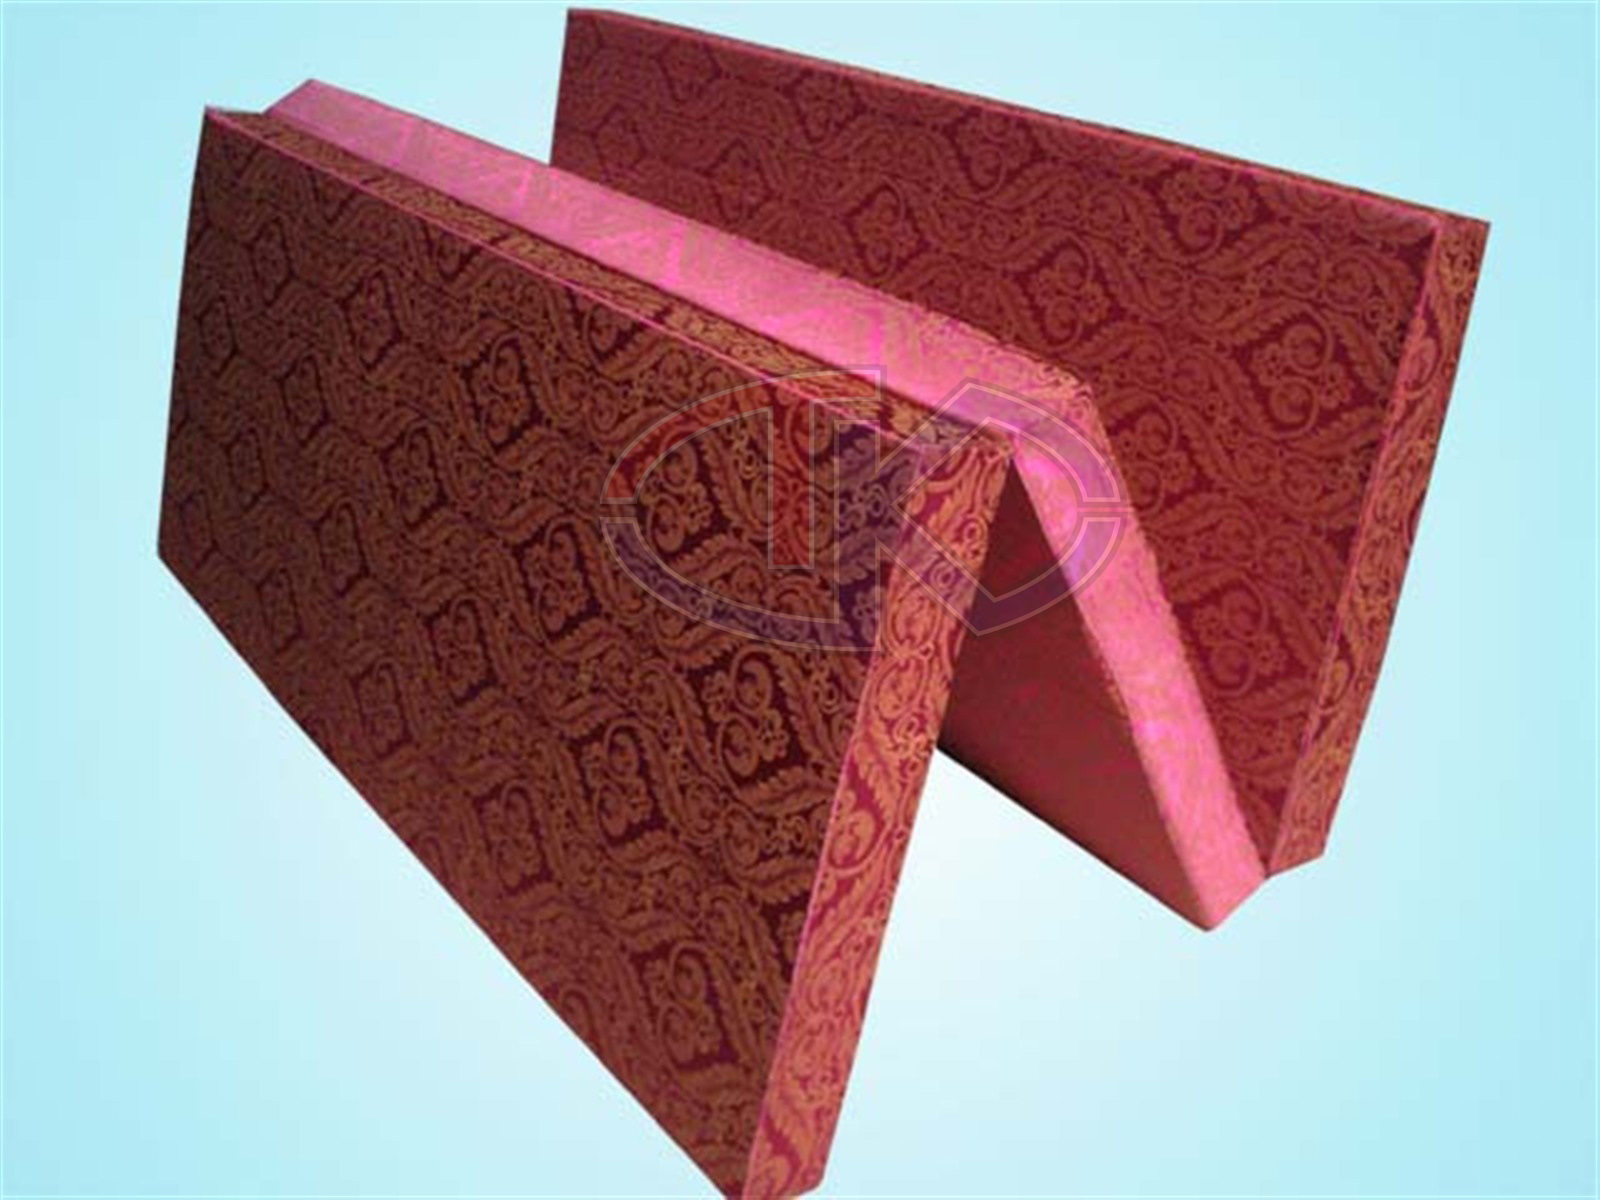 foam mattress import duty from vietnam to usa